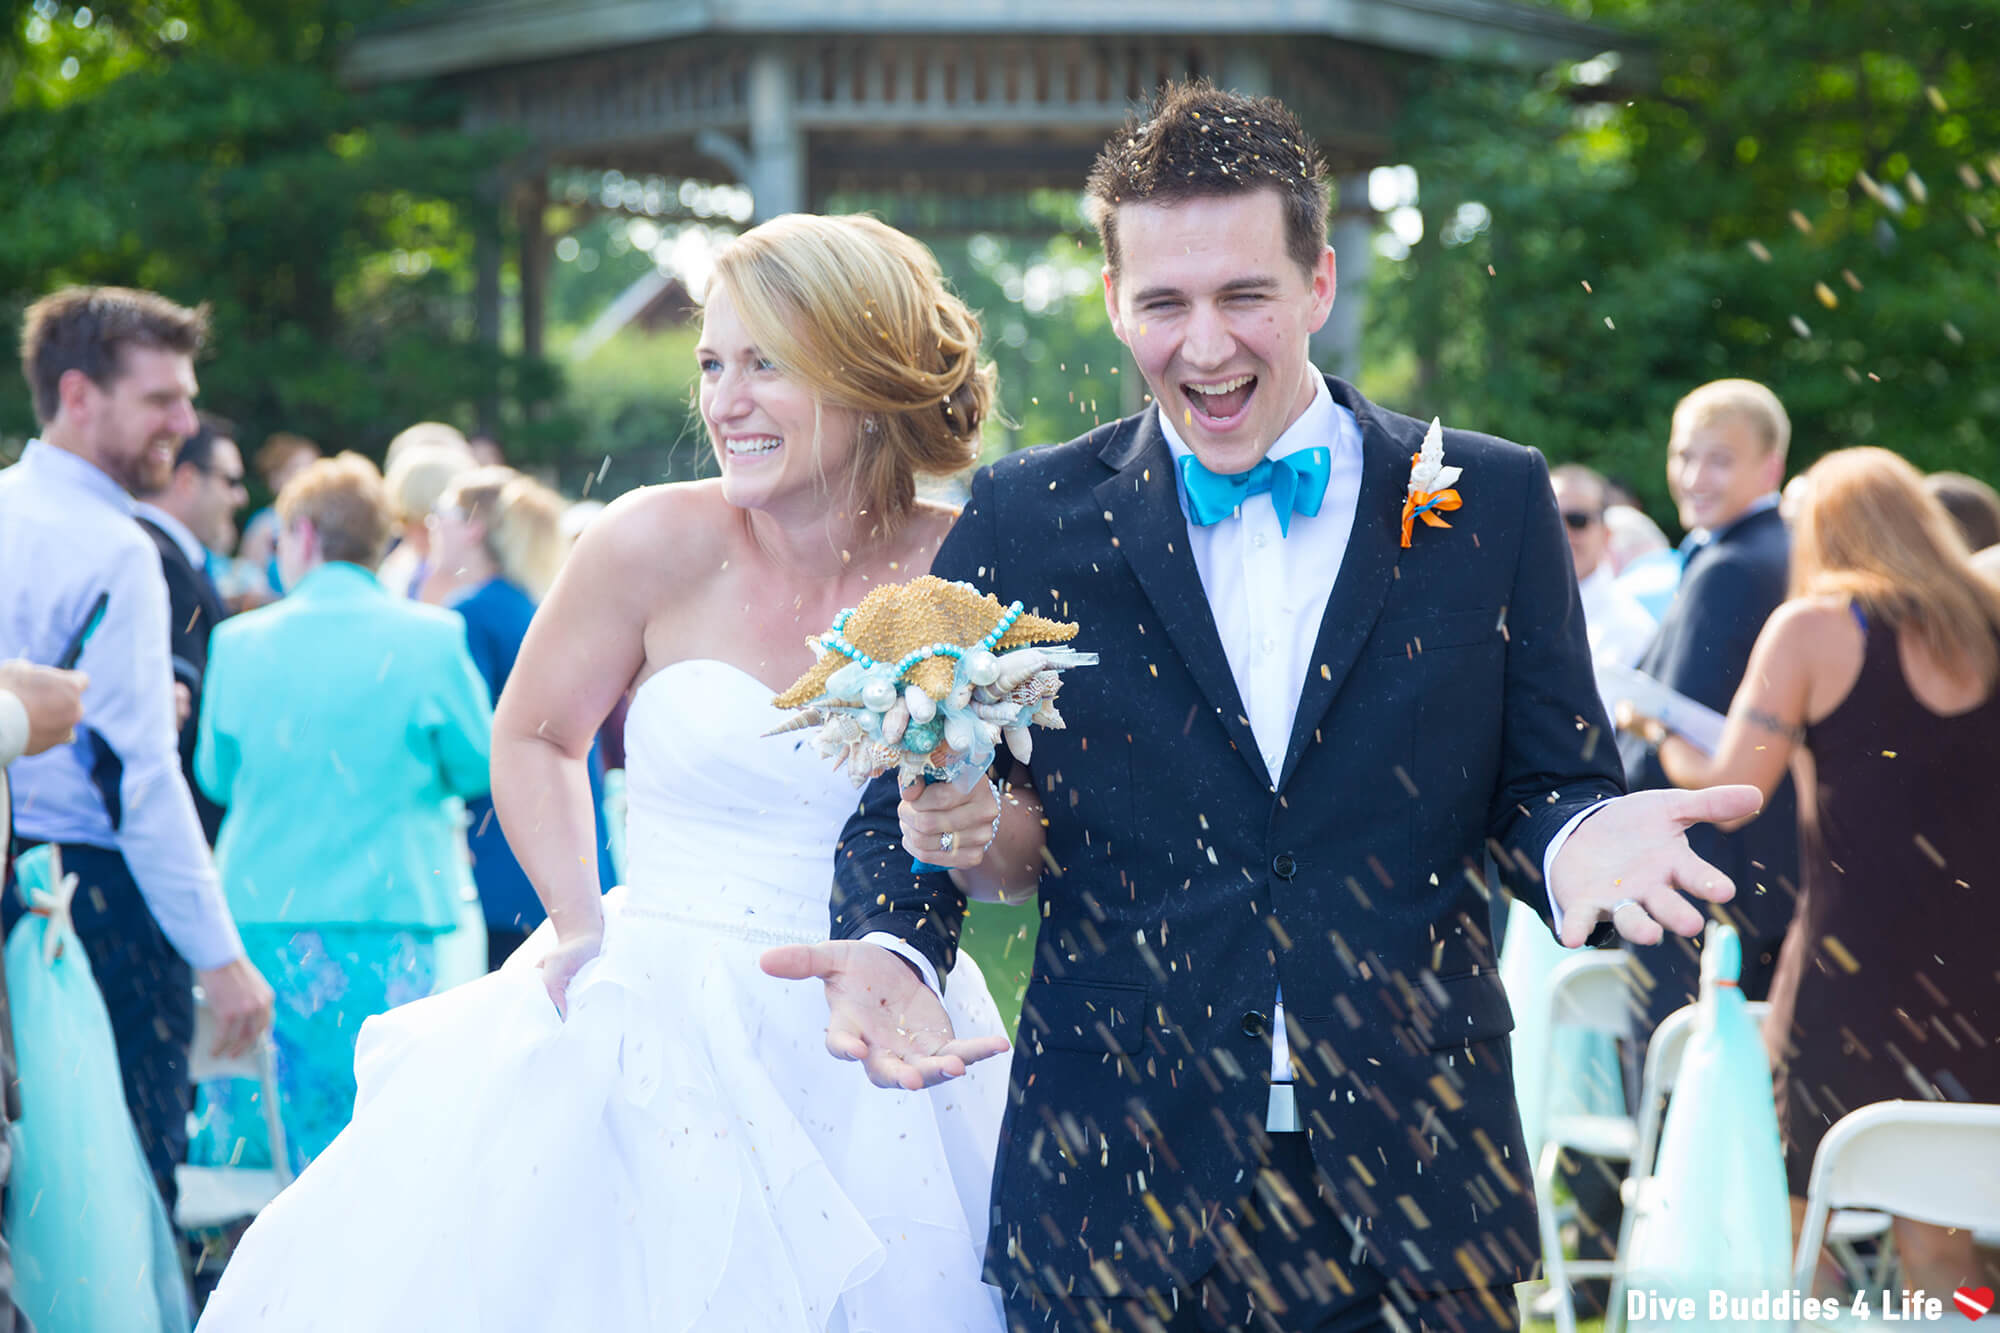 Scuba Joey And Ali's Wedding With Bird Seed Sprinkles